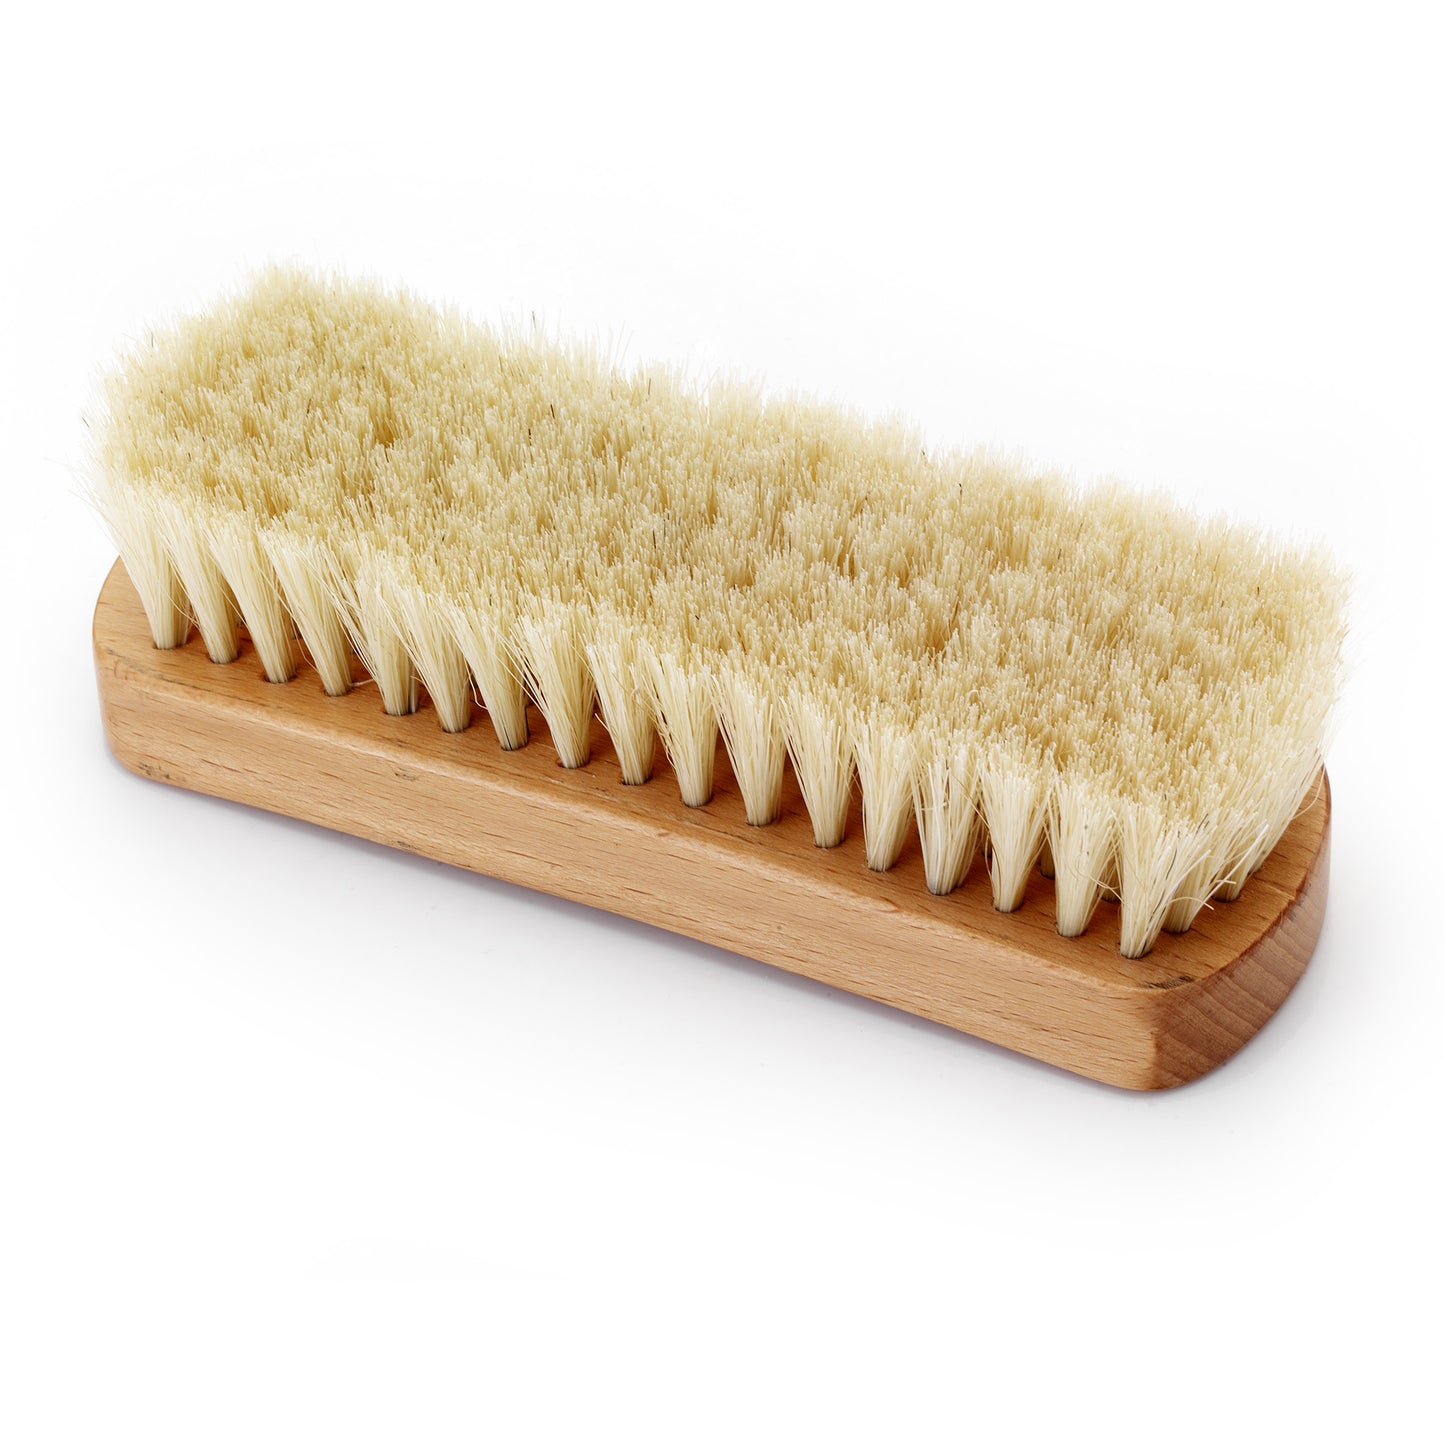 Premium Soft Bristle Shoe Cleaning Brush – Gold Standard